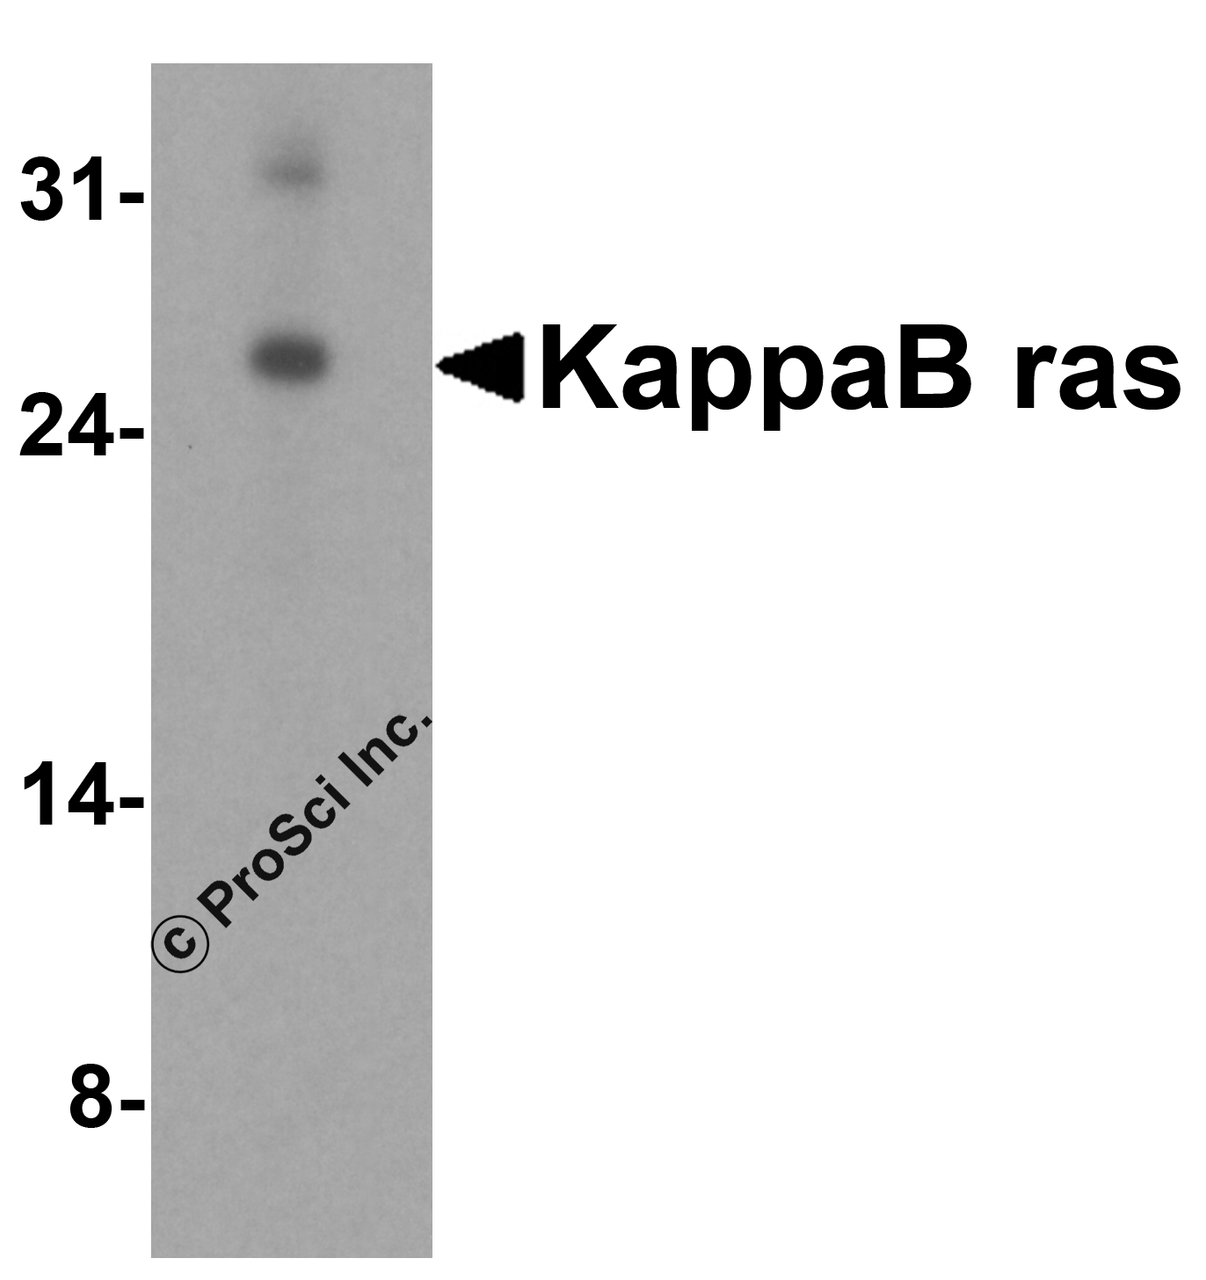 Western blot analysis of KappaB ras in RAW 264.7 cell lysate with KappaB ras antibody at 2 &#956;g/mL.